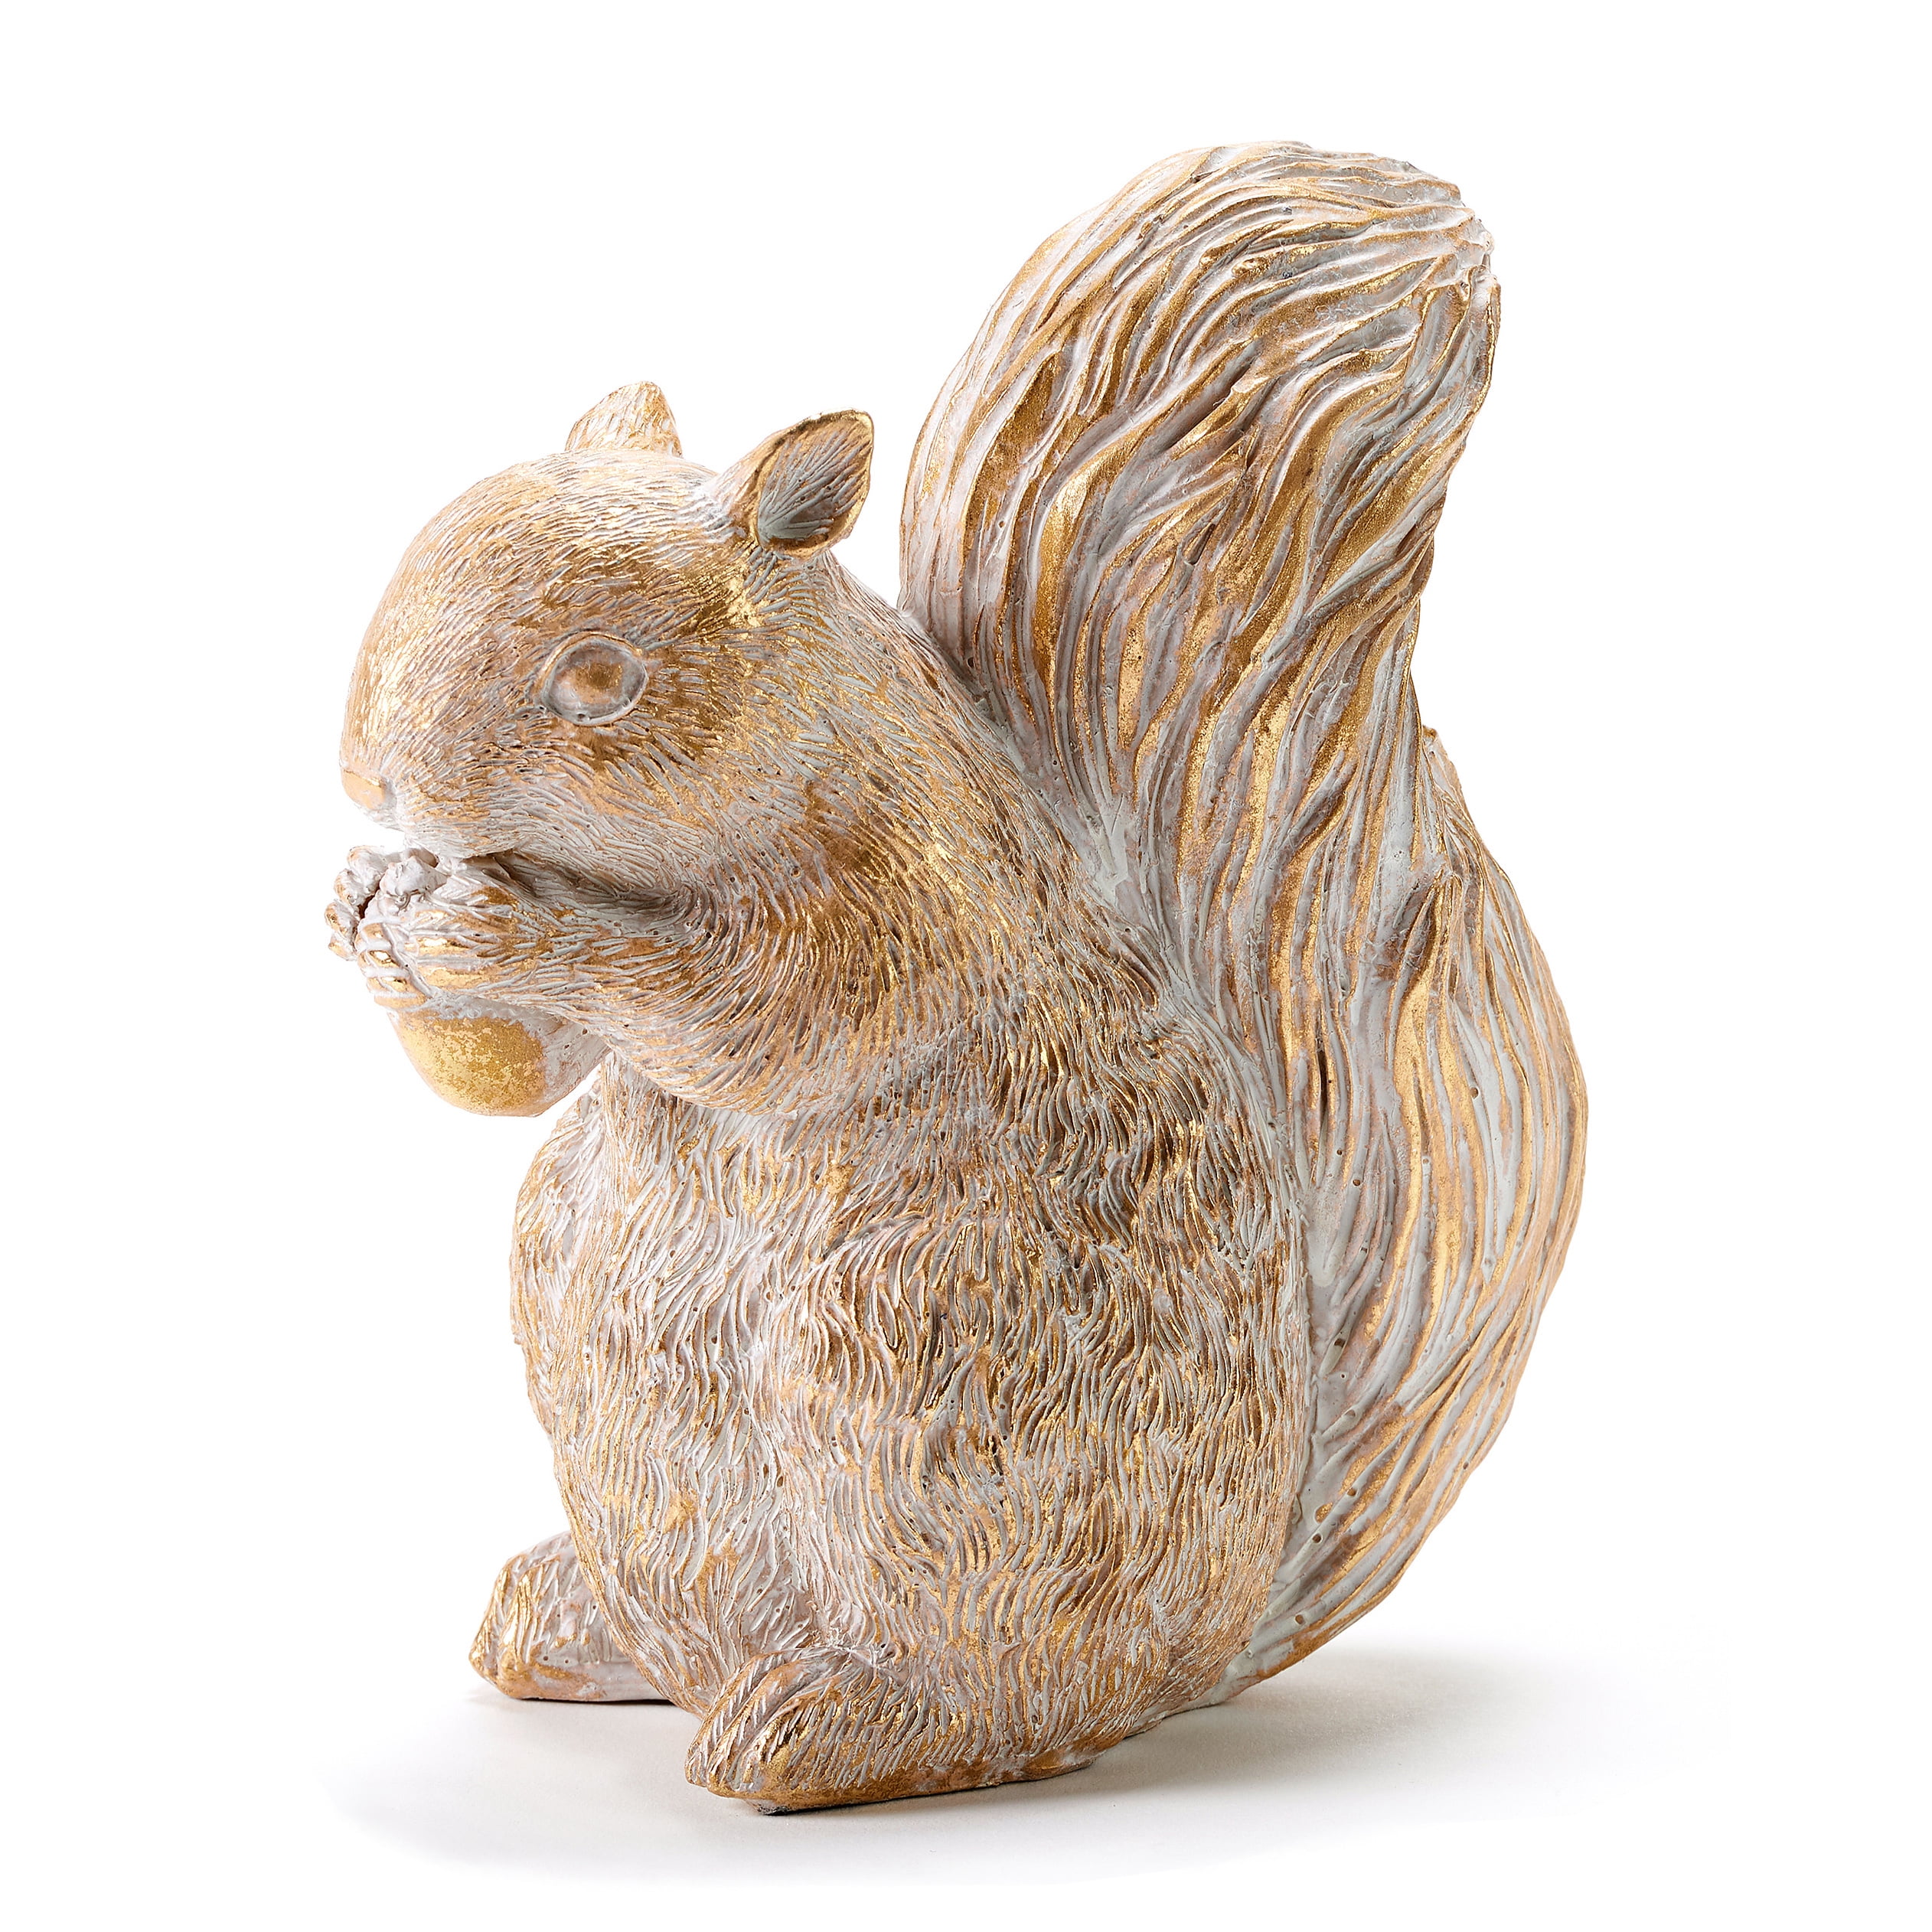 Squirrel on Acorn Ornament Vintage Bronze Resin Sculpture Home Decor Gift Statue 